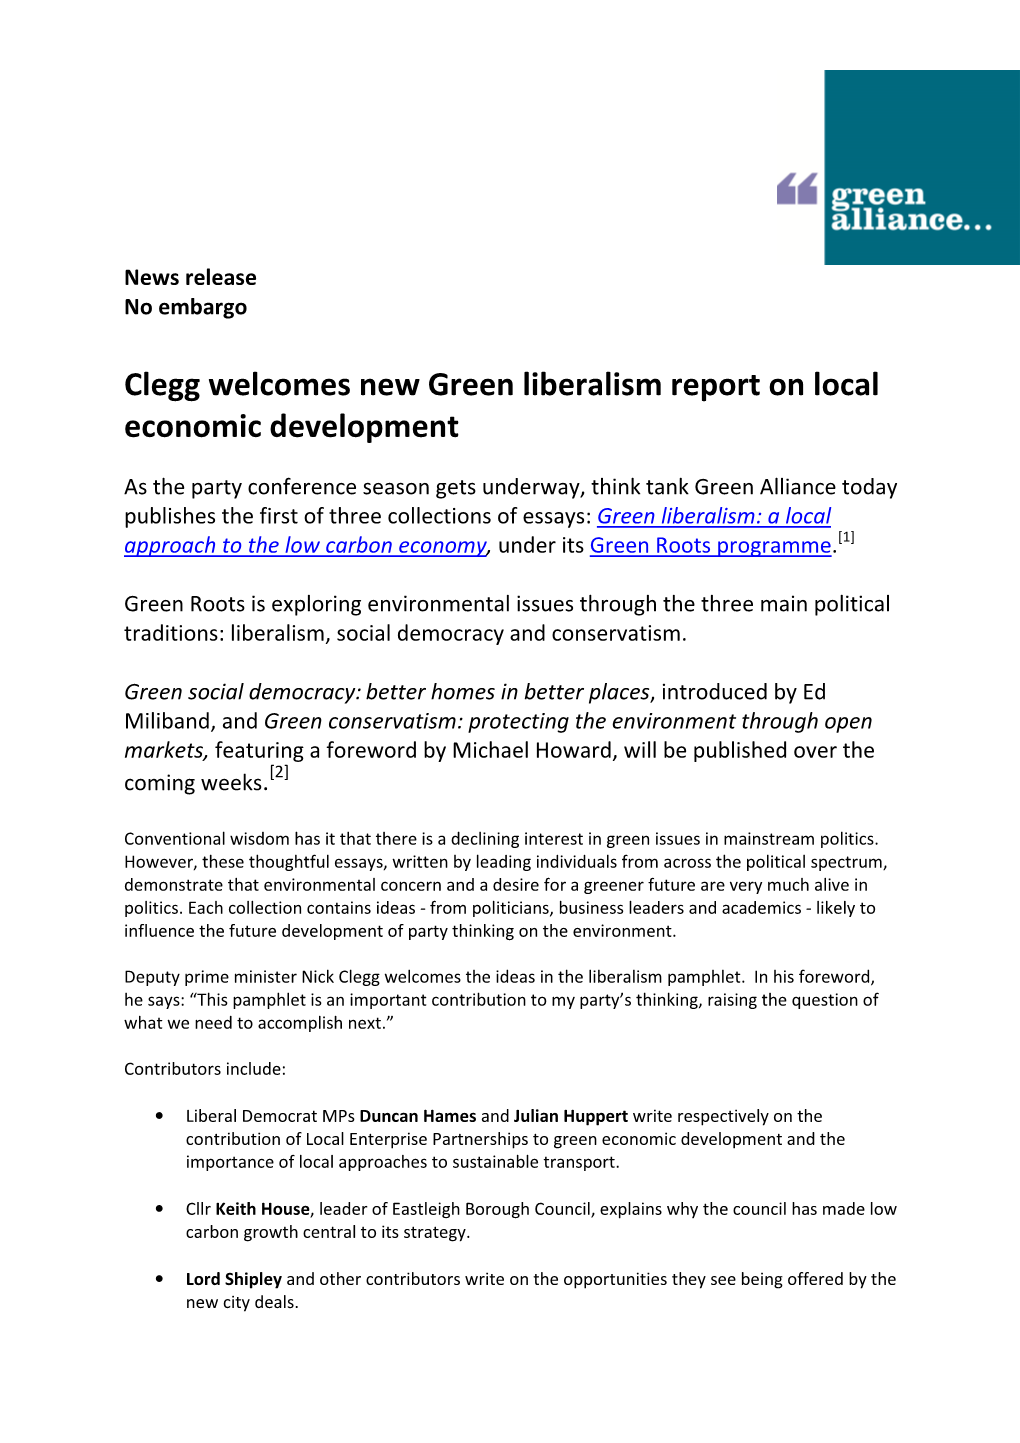 Clegg Welcomes New Green Liberalism Report on Local Economic Development